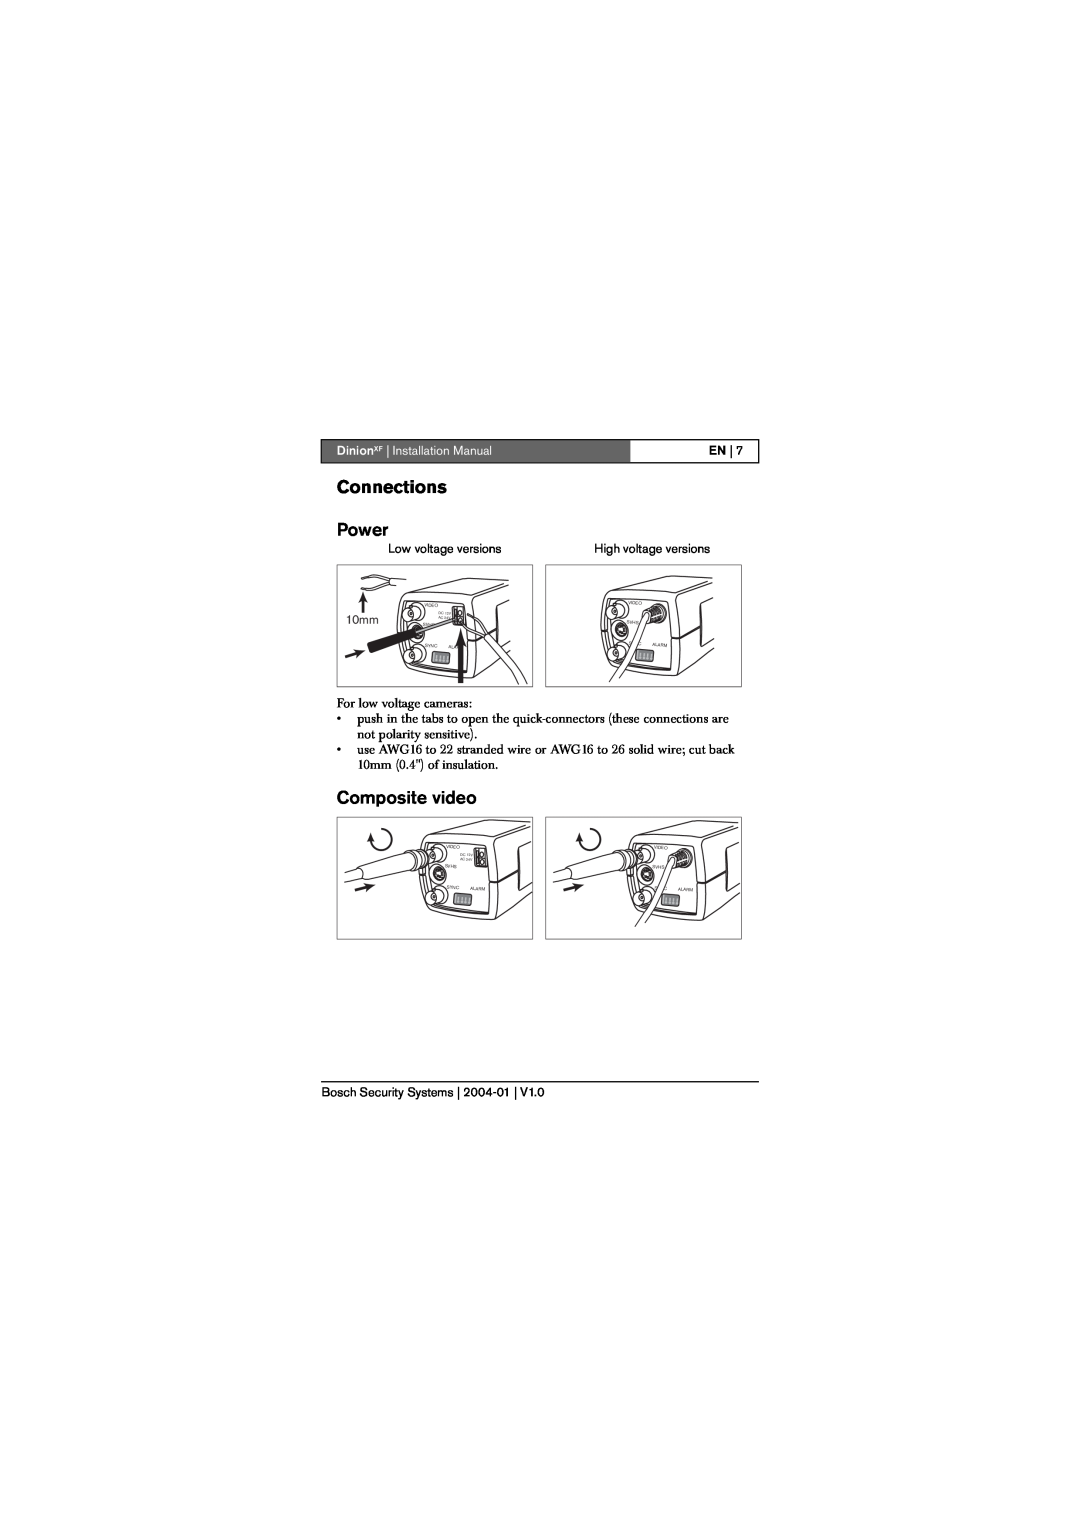 Bosch Appliances LTC 0620, LTC 0495 Connections, Power, Composite video, DinionXF Installation Manual 